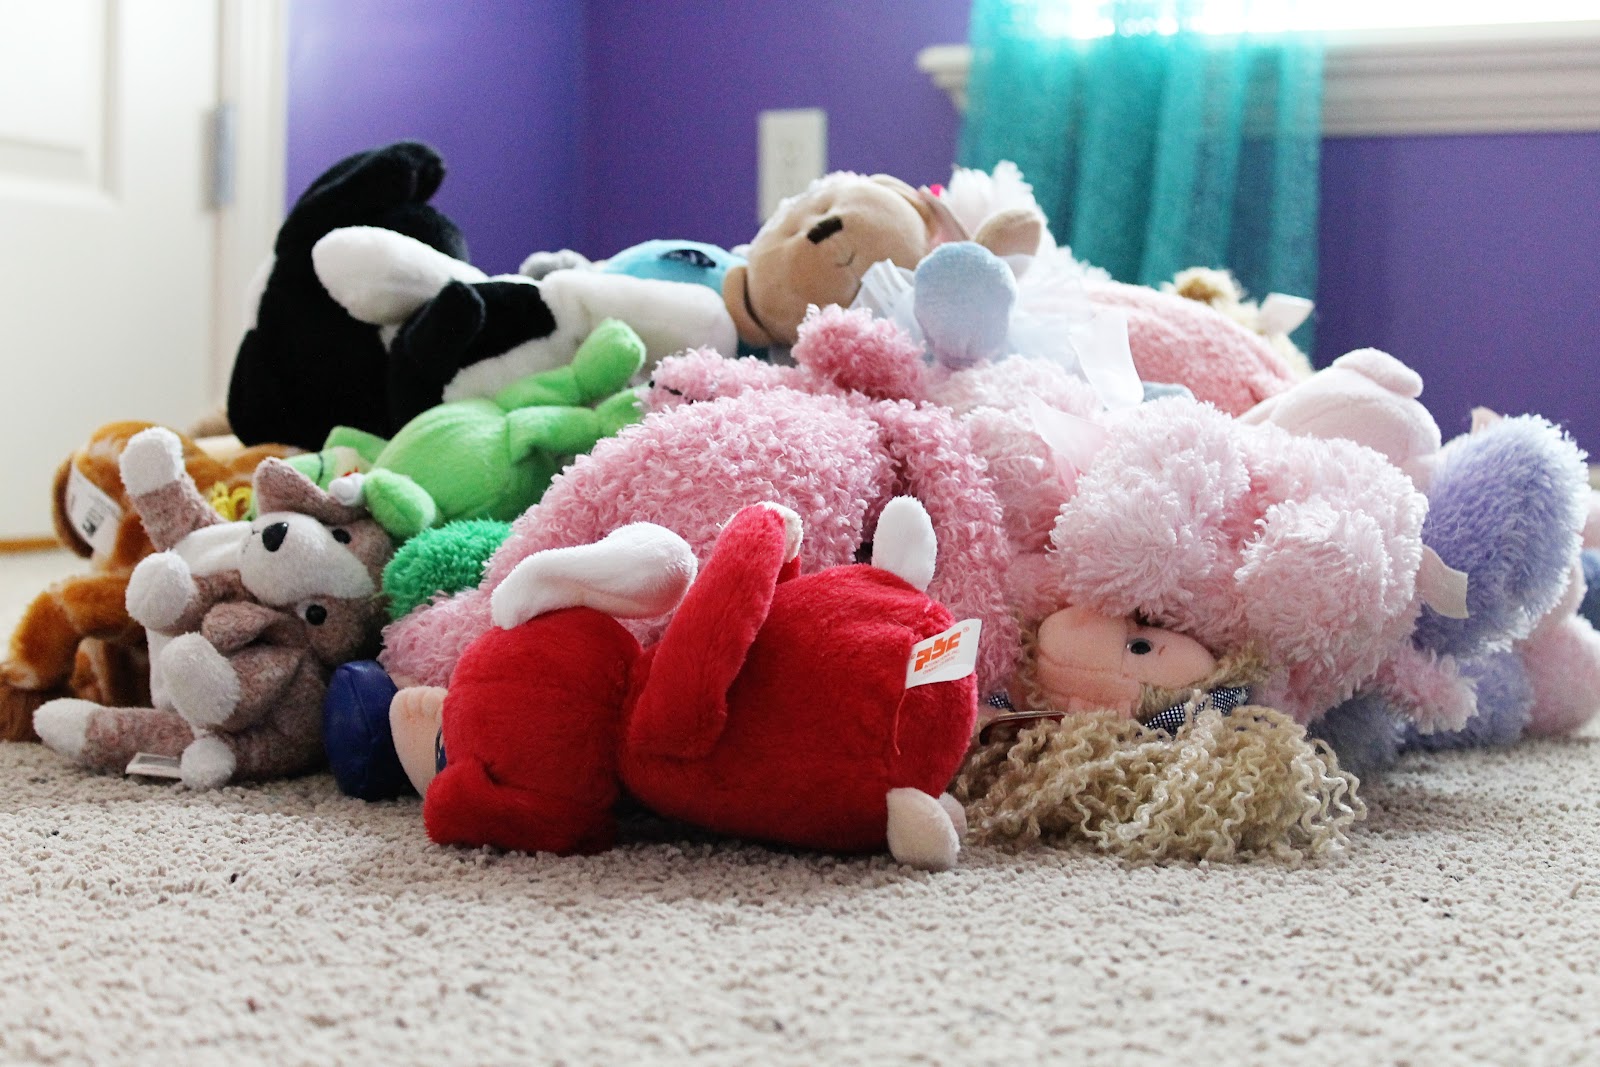 Organize It Challenge: Stuffed Animals